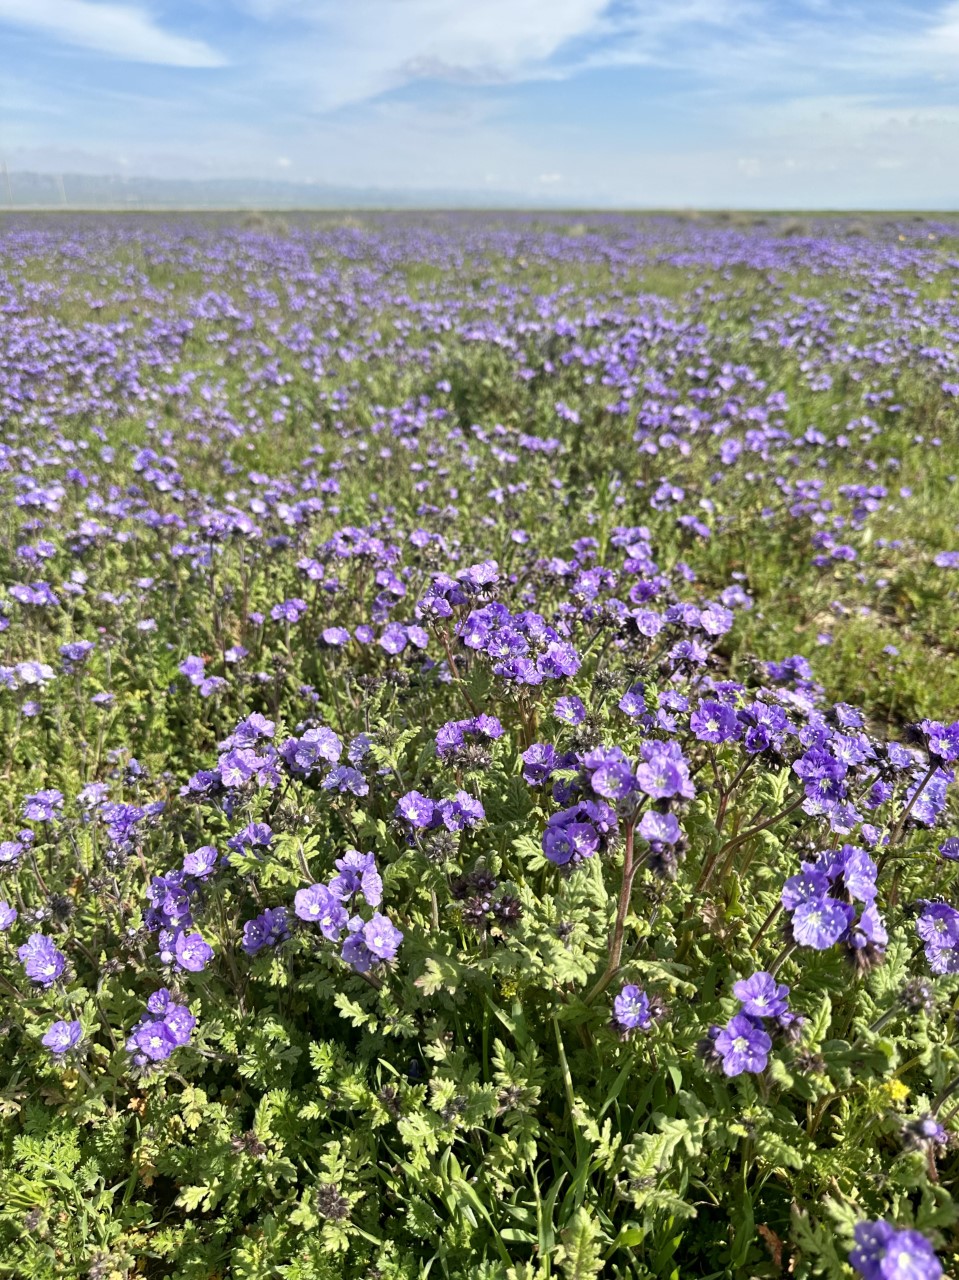 A field of purple wildflowers on the Carrizo Plain.